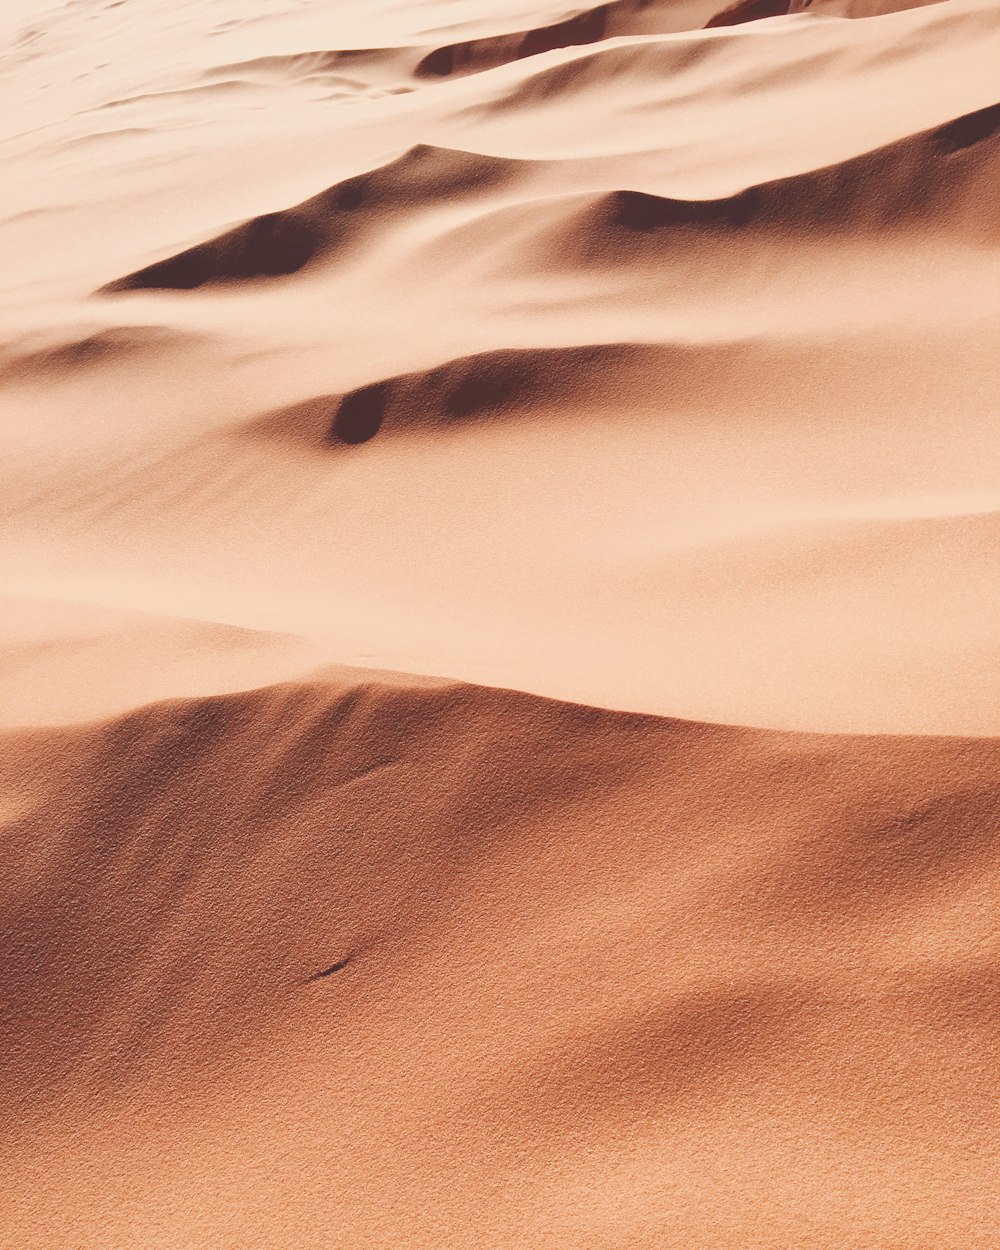 Photo Of Desert Sand Photo Free Texture Image On Unsplash